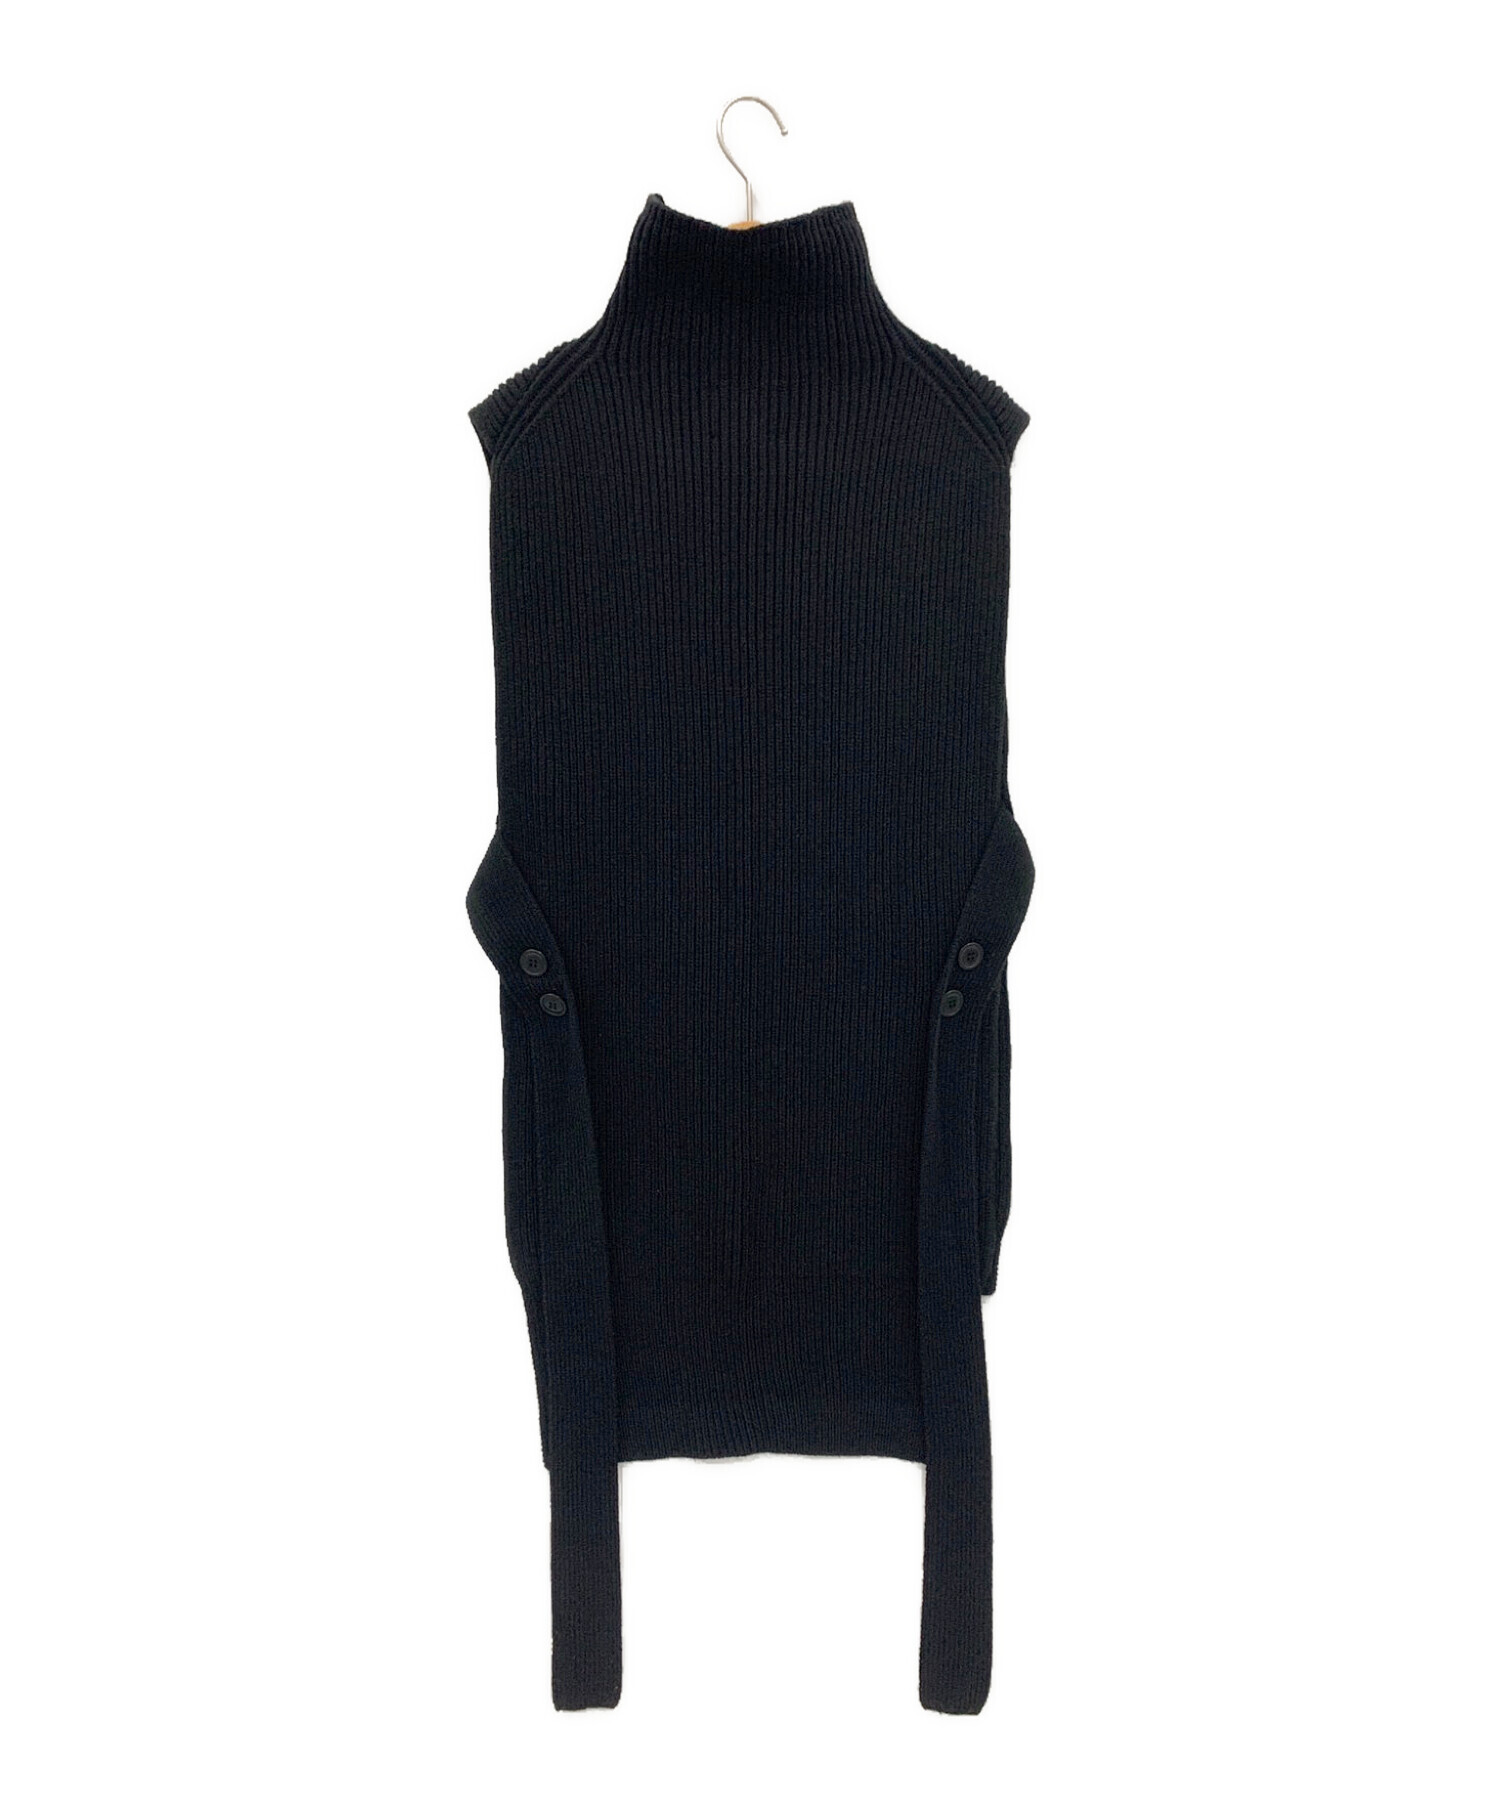 Ameri (アメリ) VEST LAYERED SHIRT DRESS ブラック サイズ:M